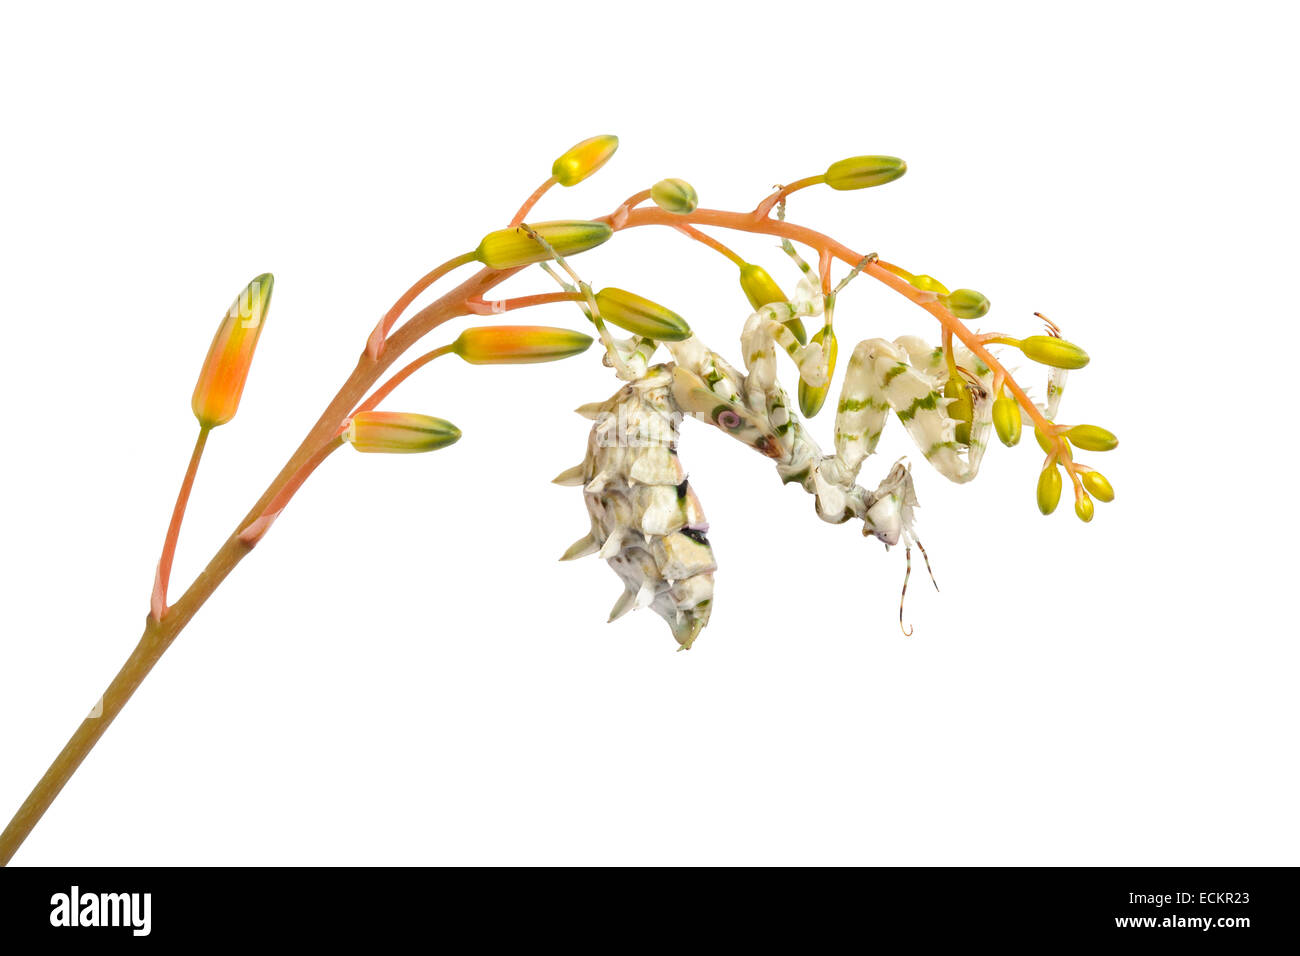 Flores espinosas, mantis Pseudocreobotra wahlbergi, África, sobre fondo blanco. Foto de stock